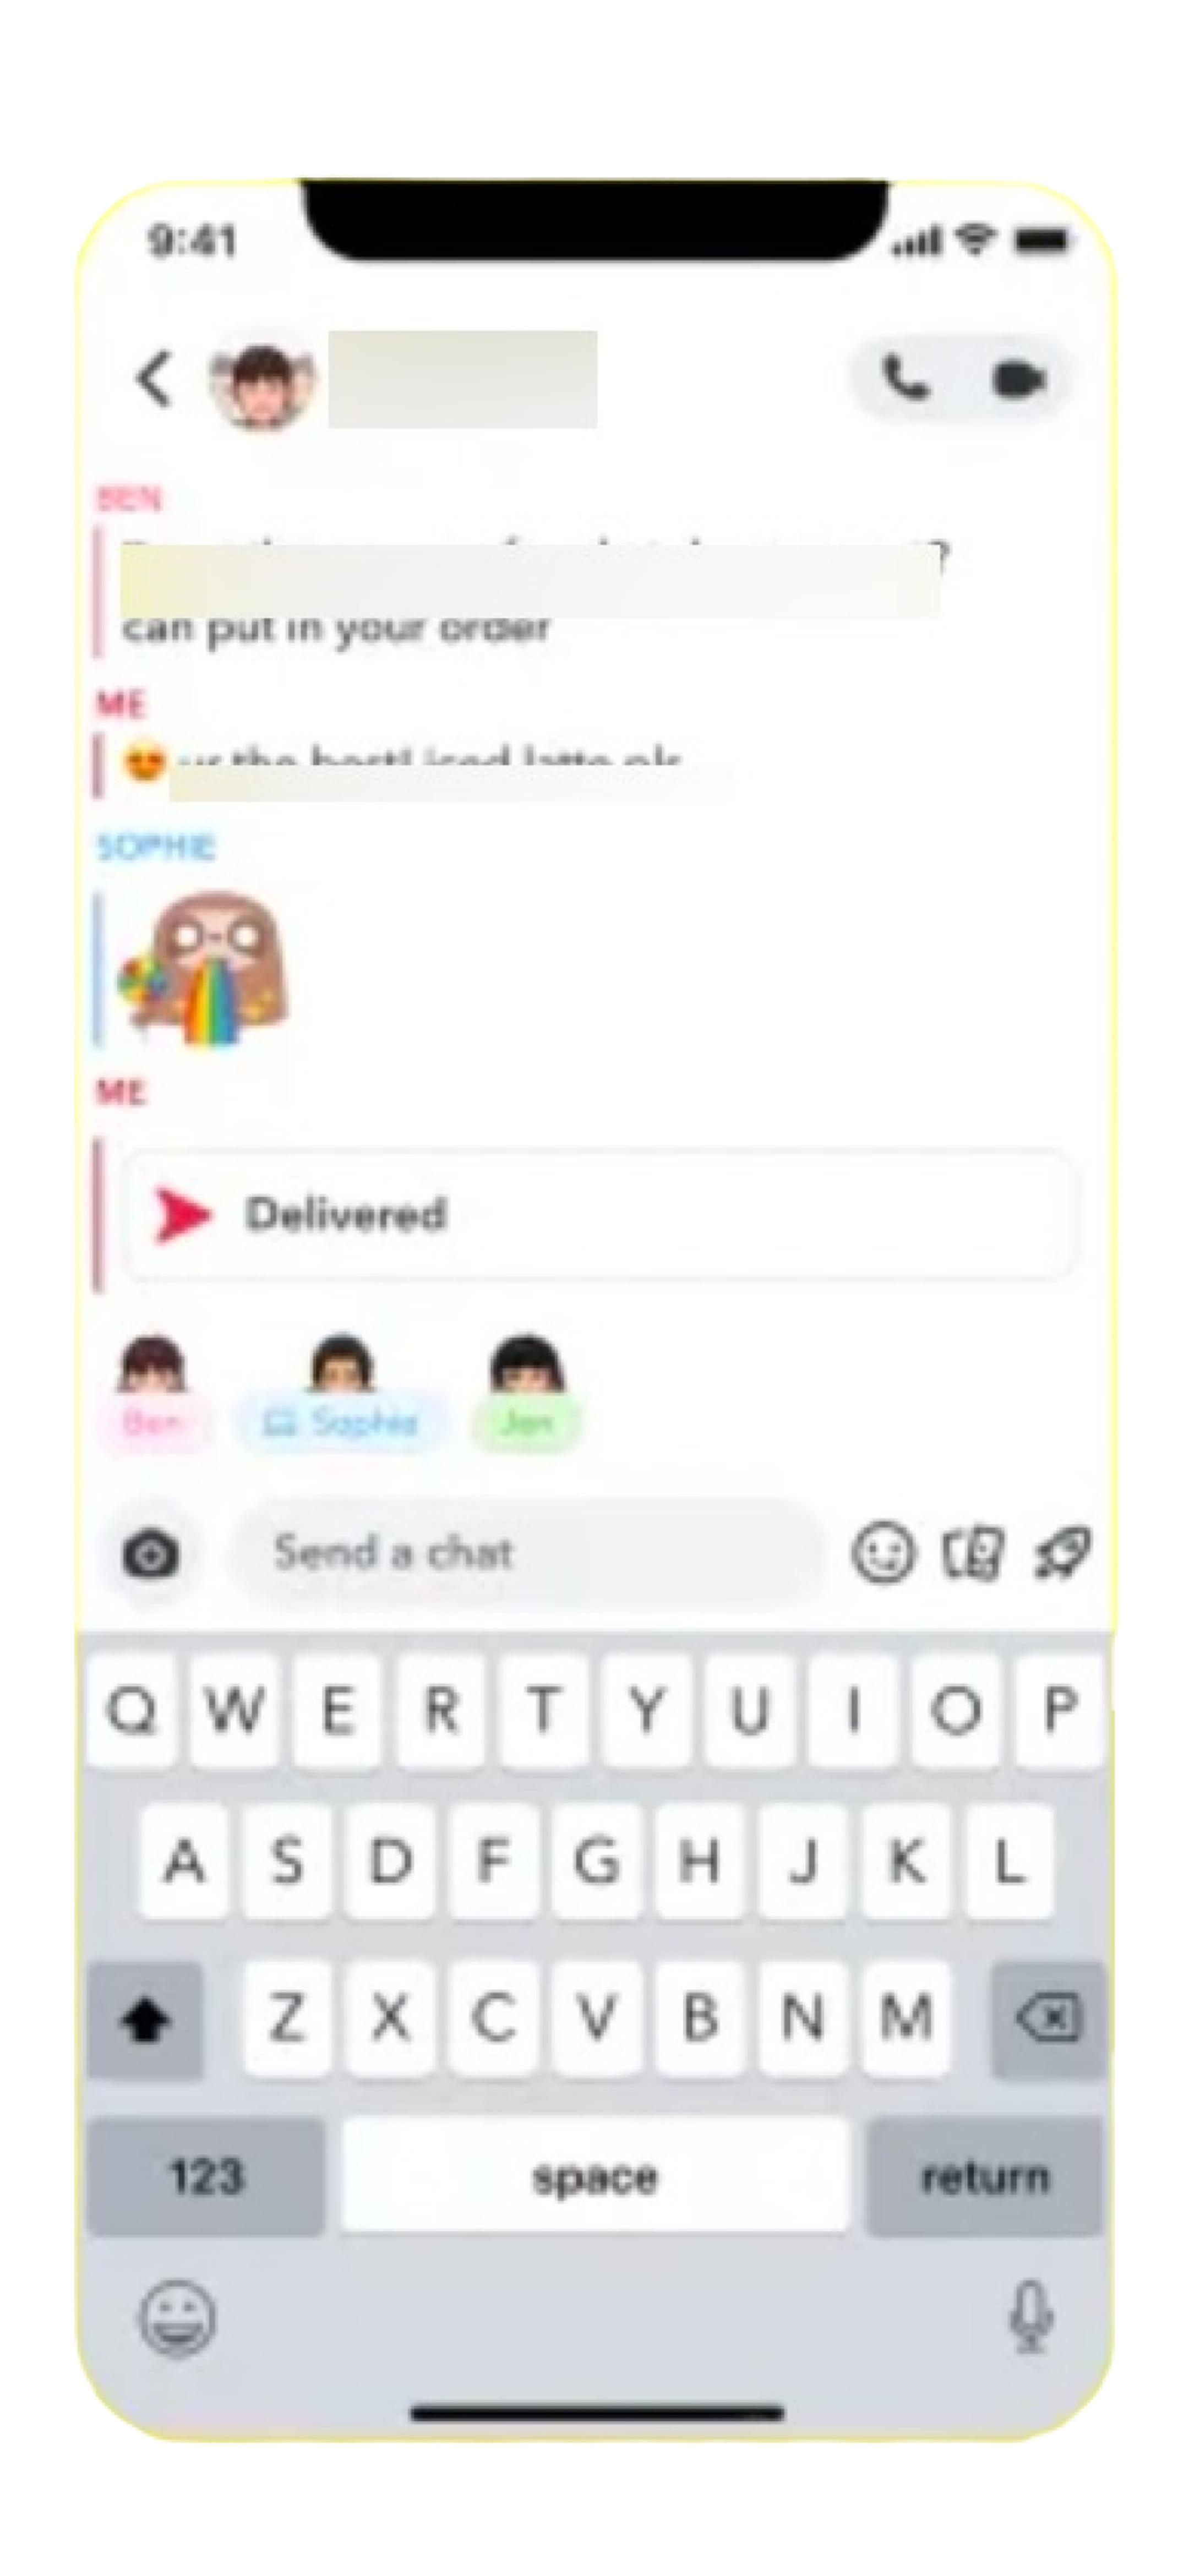 A screenshot illustrating the Chat screen on Snapchat